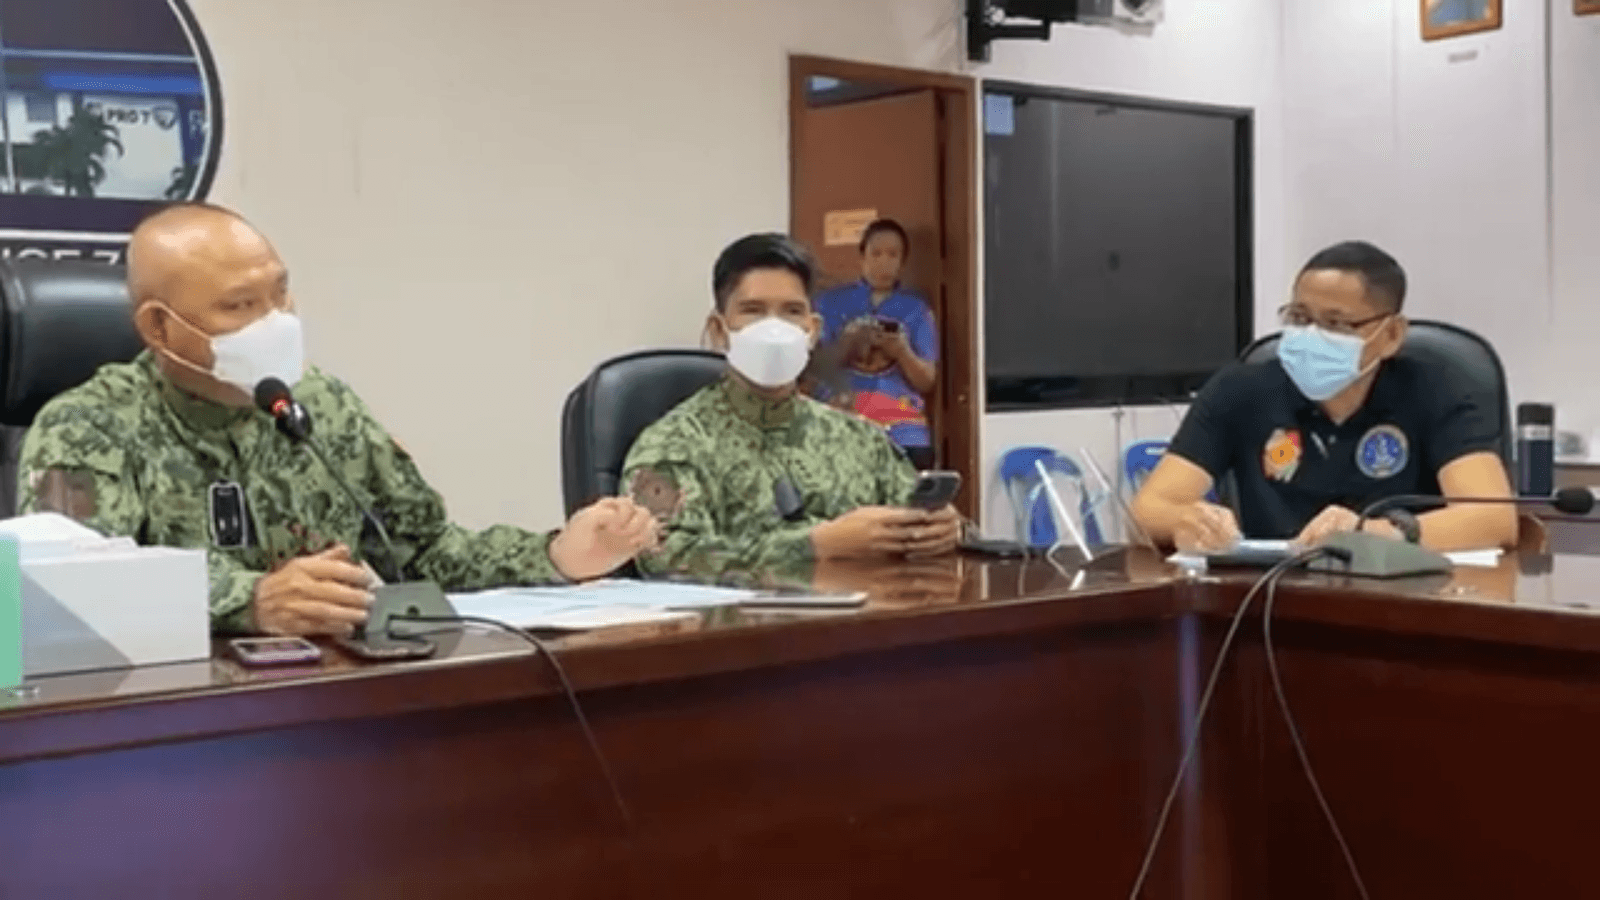 Cop probing rape-torture in Cebu ‘secret’ police cell fears for life